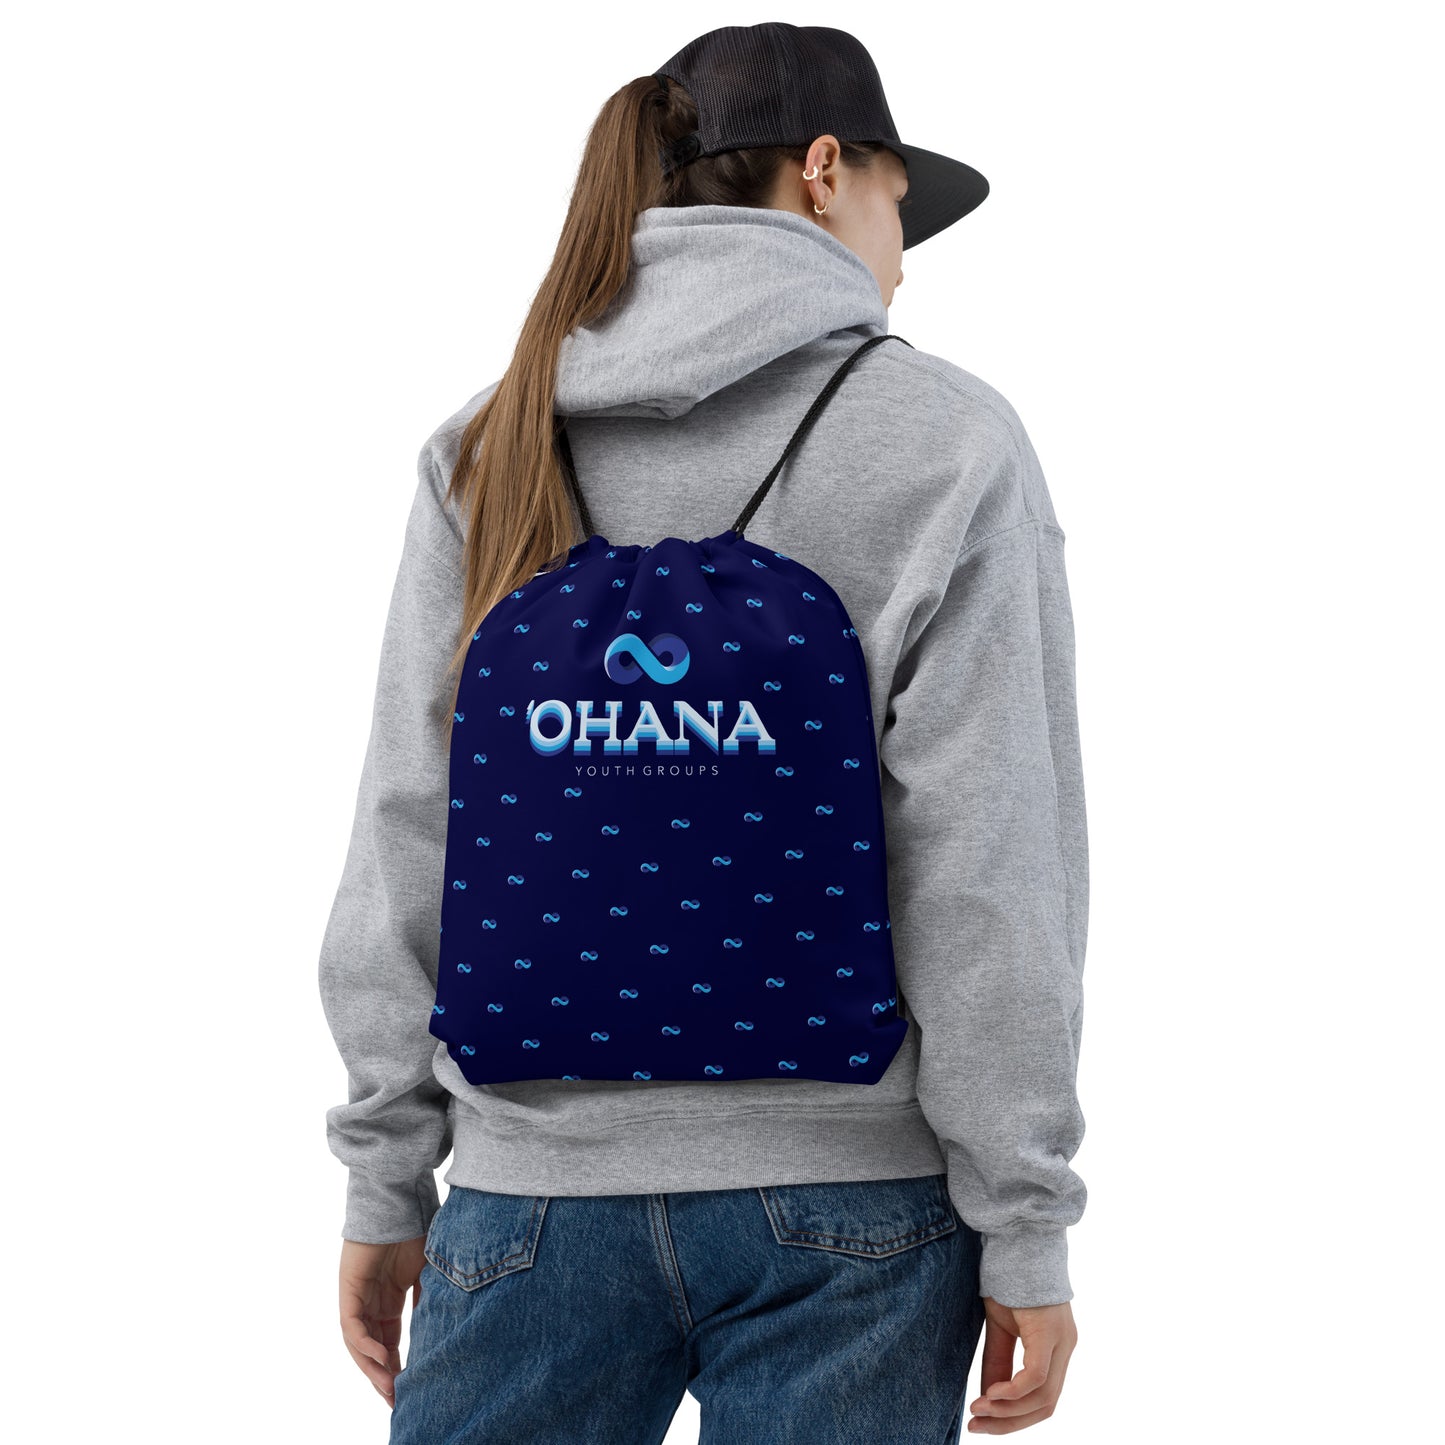 Ohana Drawstring bag